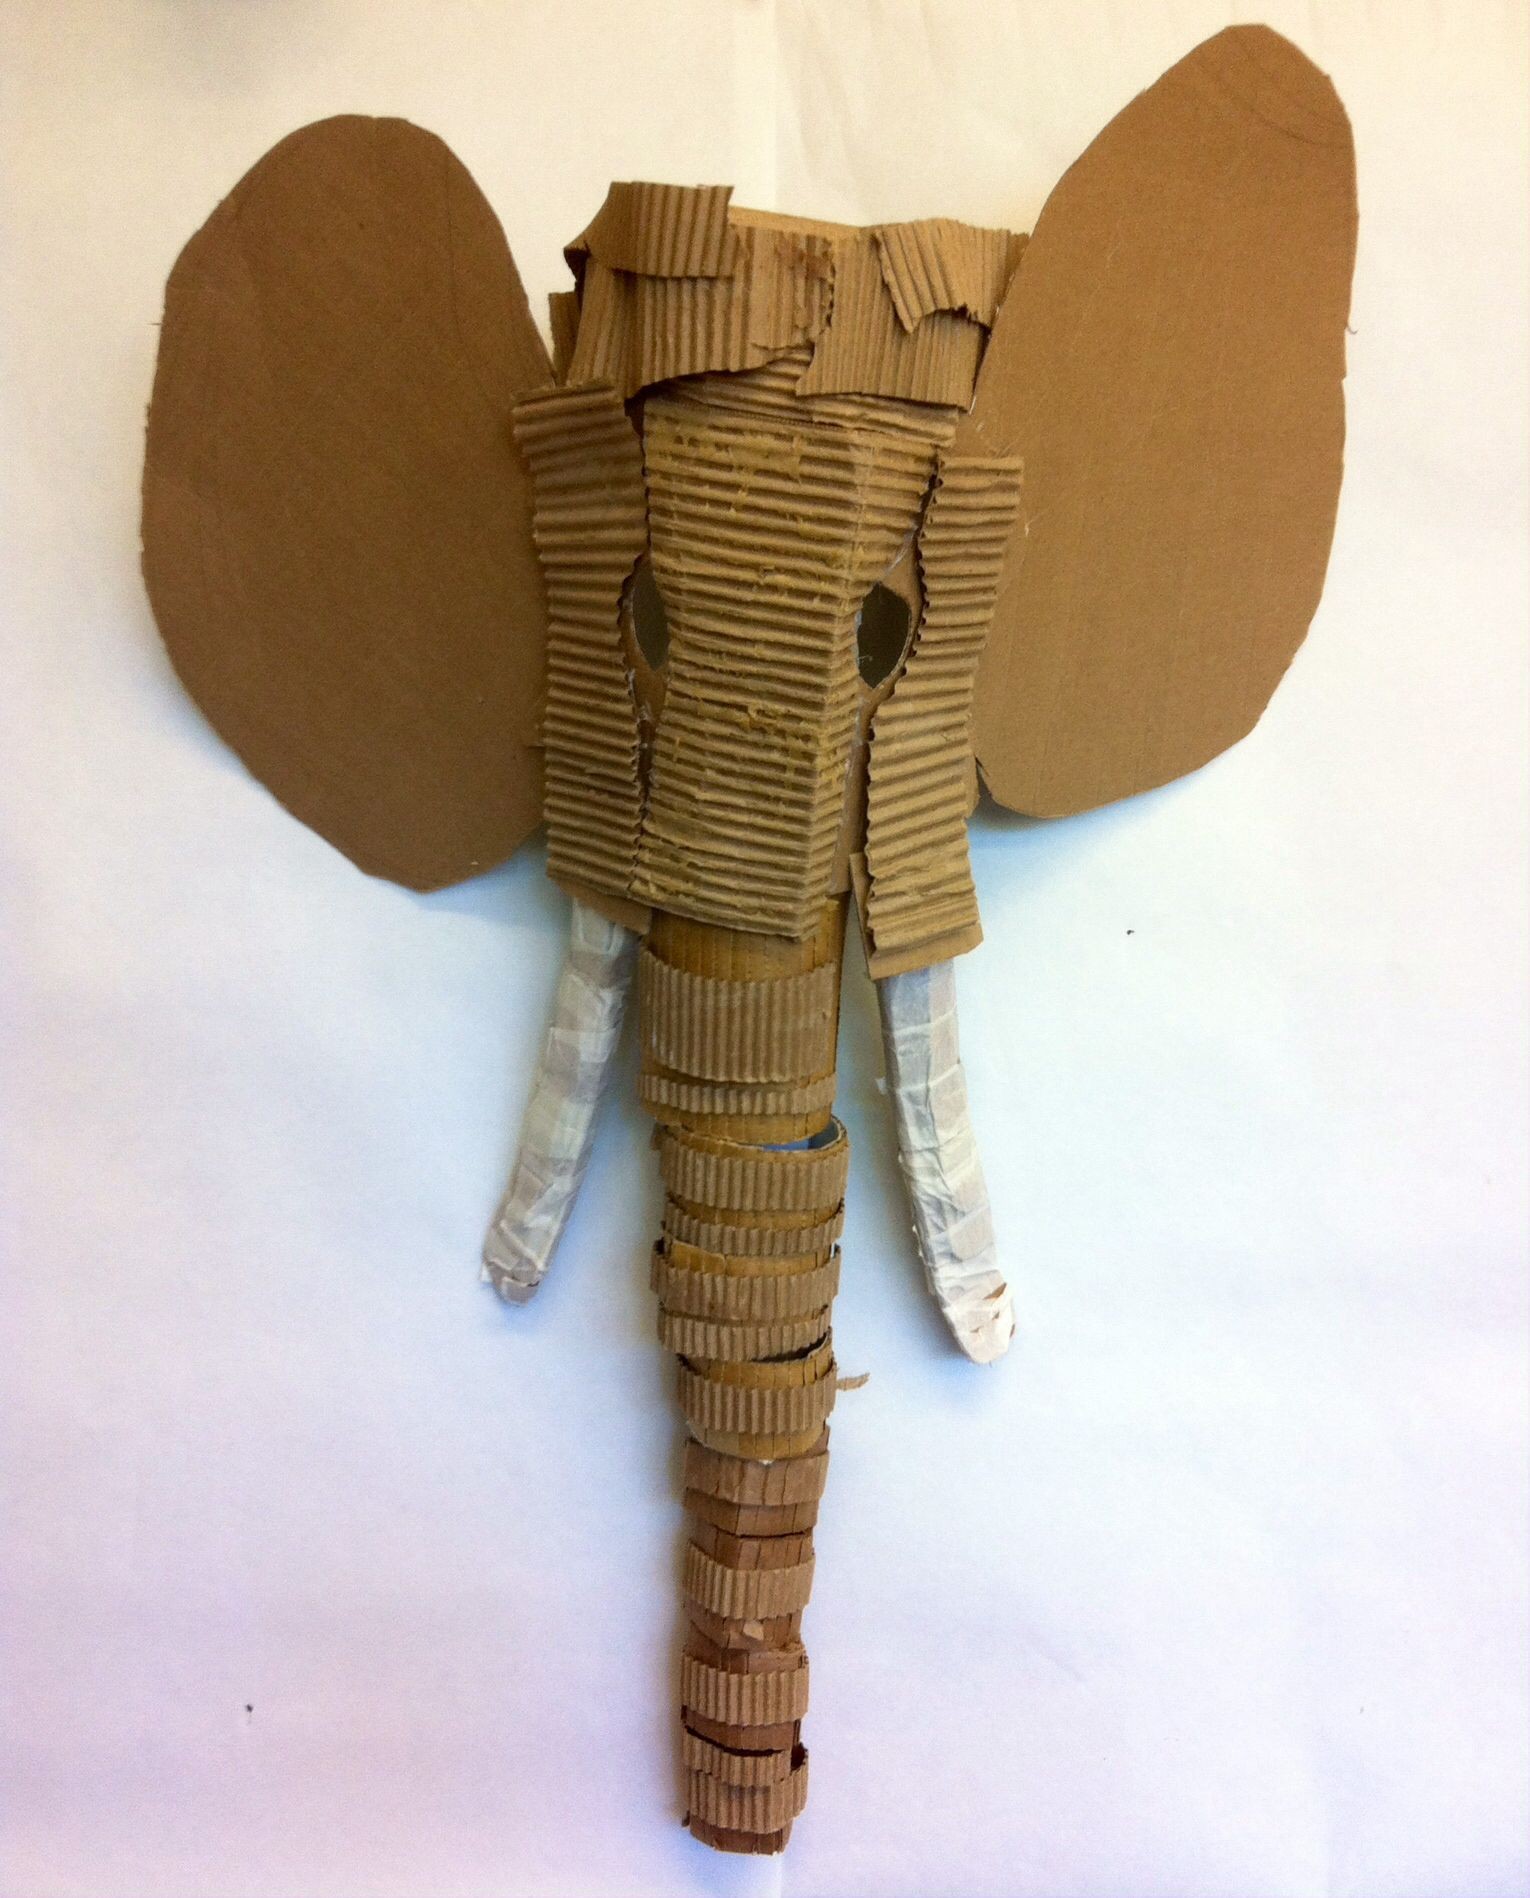 Elephant Papercraft Imagen Relacionada Cardboard Pinterest